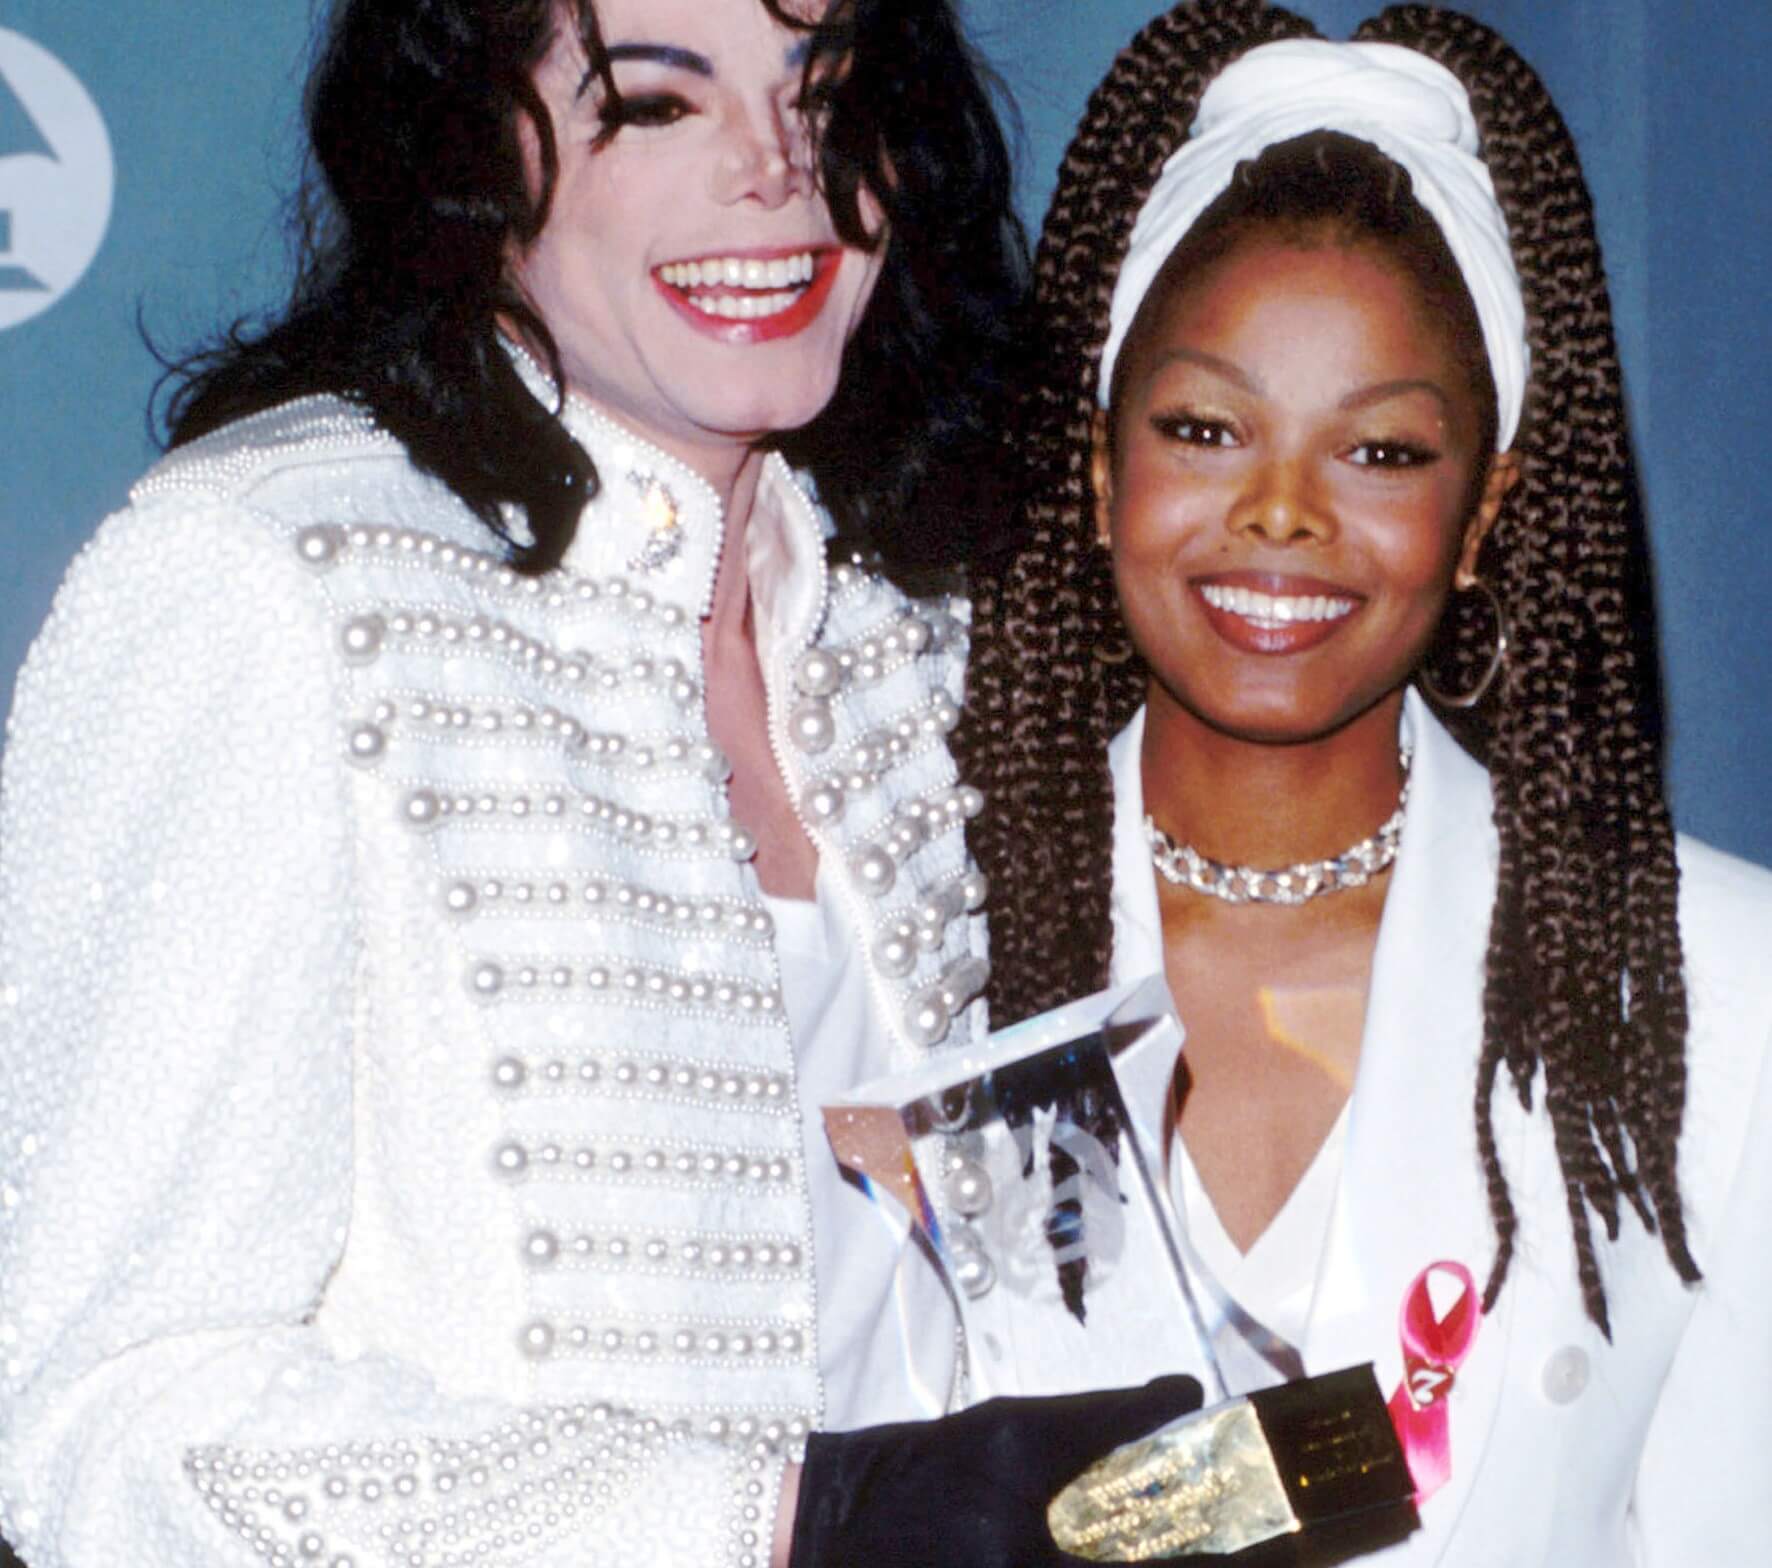 "Scream" duo Michael Jackson and Janet Jackson wearing white